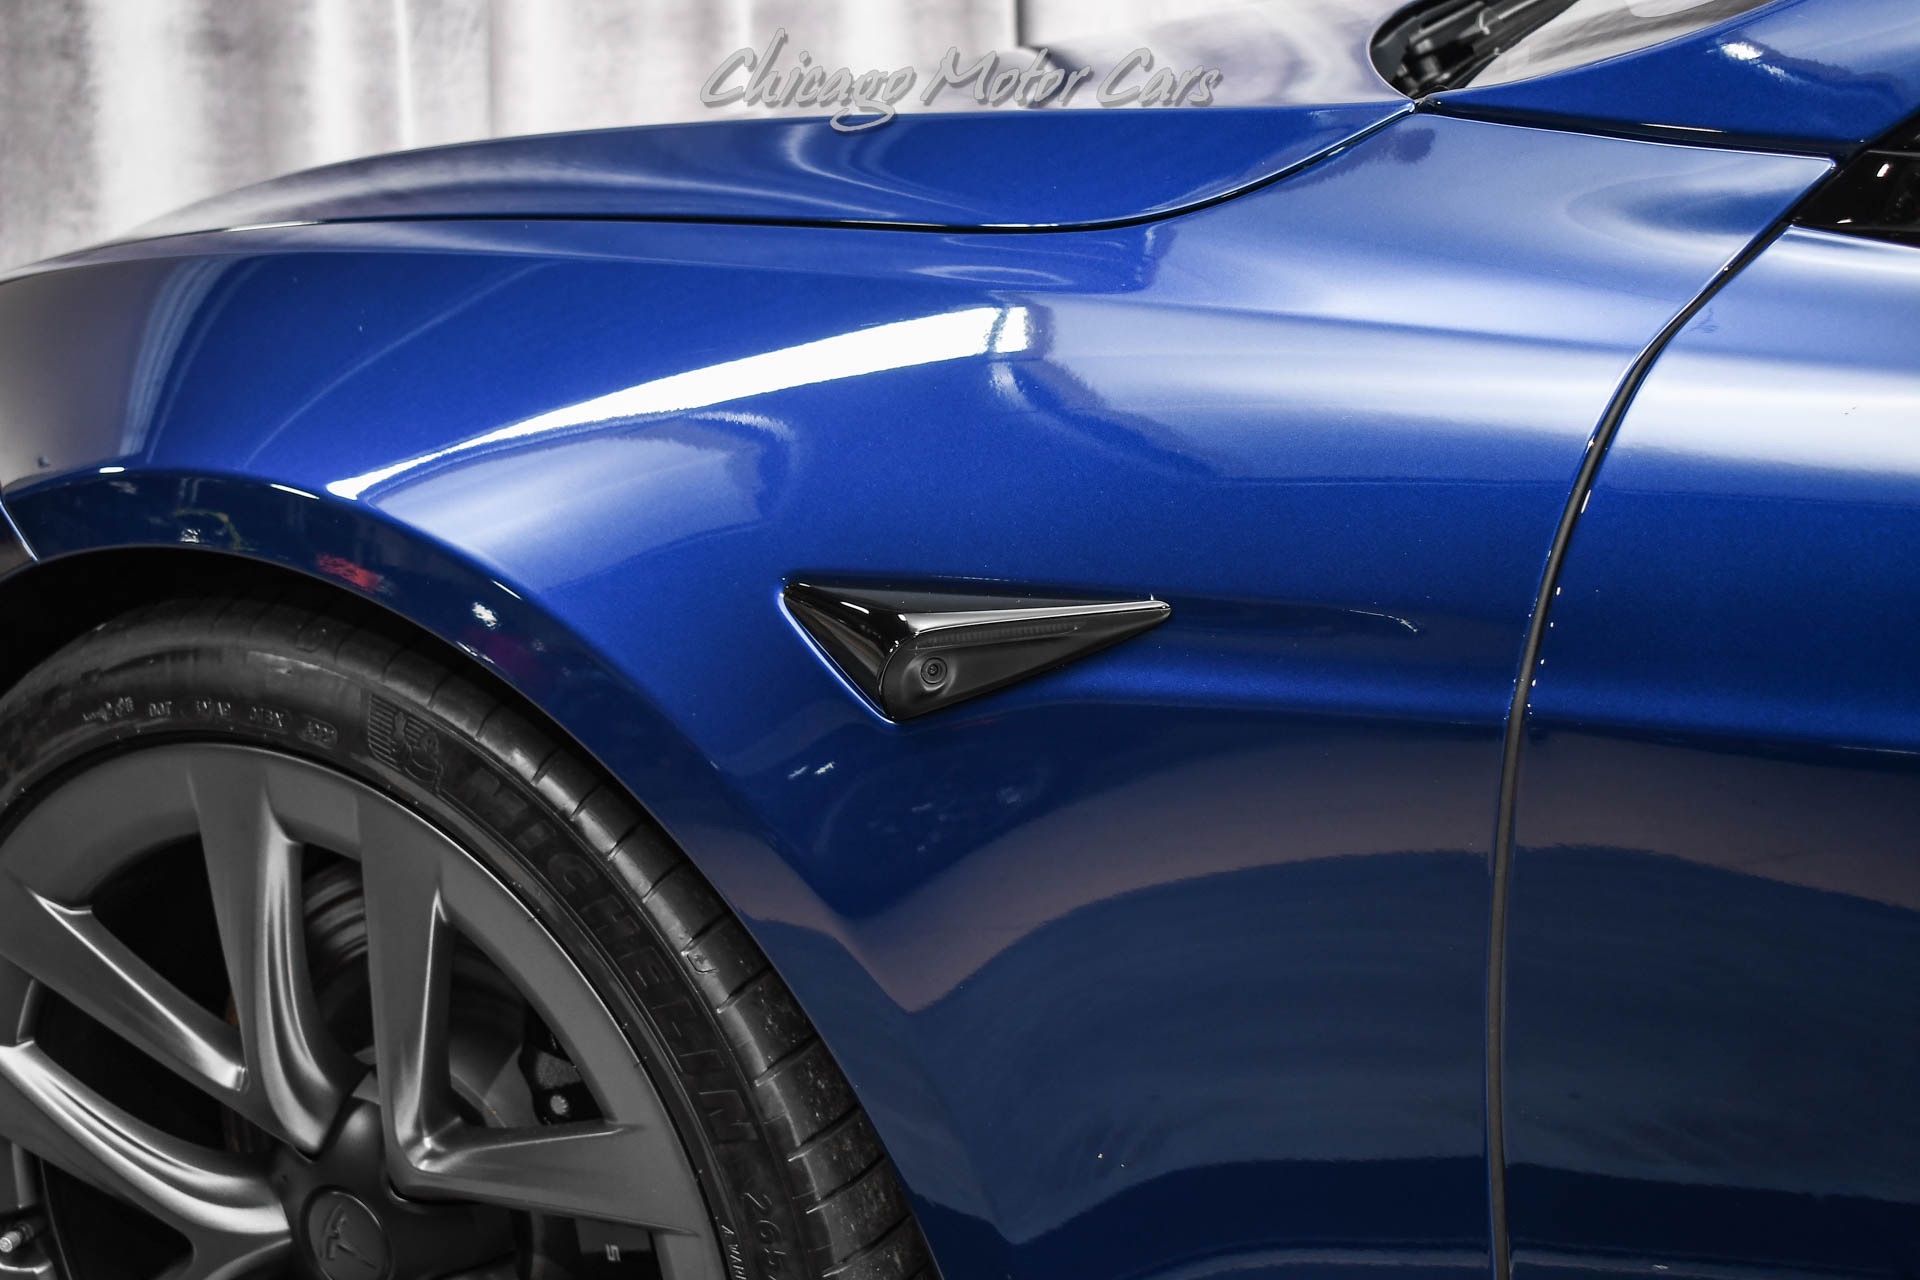 Used-2022-Tesla-Model-S-Plaid-Sedan-Full-Self-Driving-Capability-21-Arachnid-Wheels-1000HP